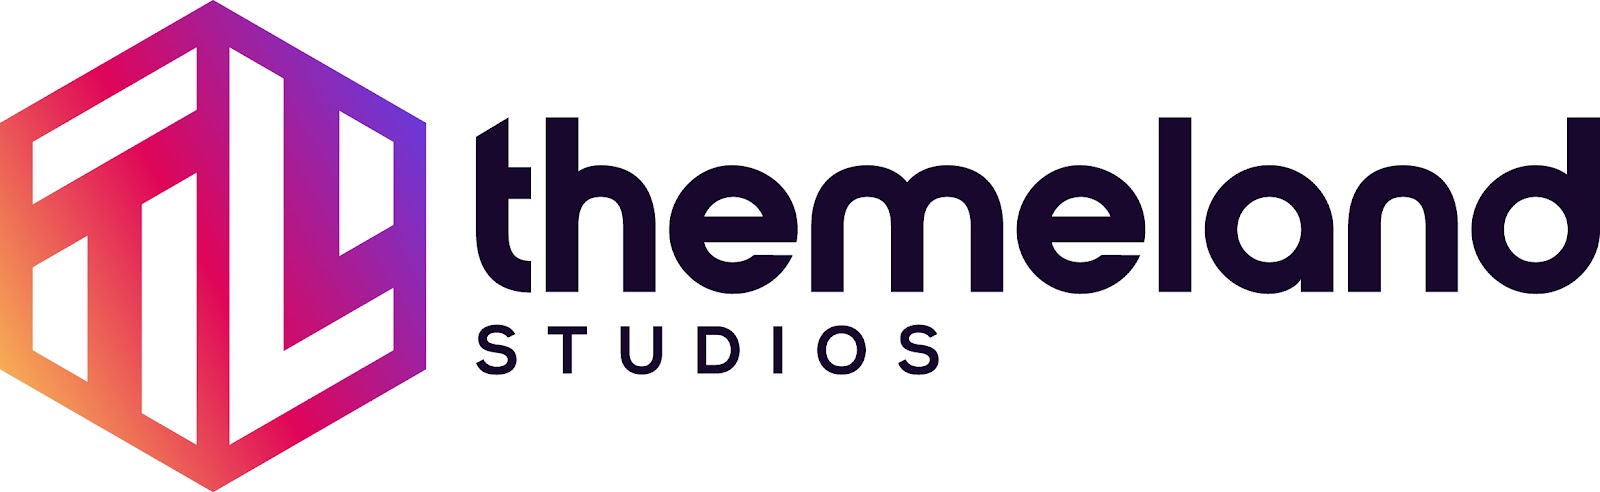 Themeland Studios